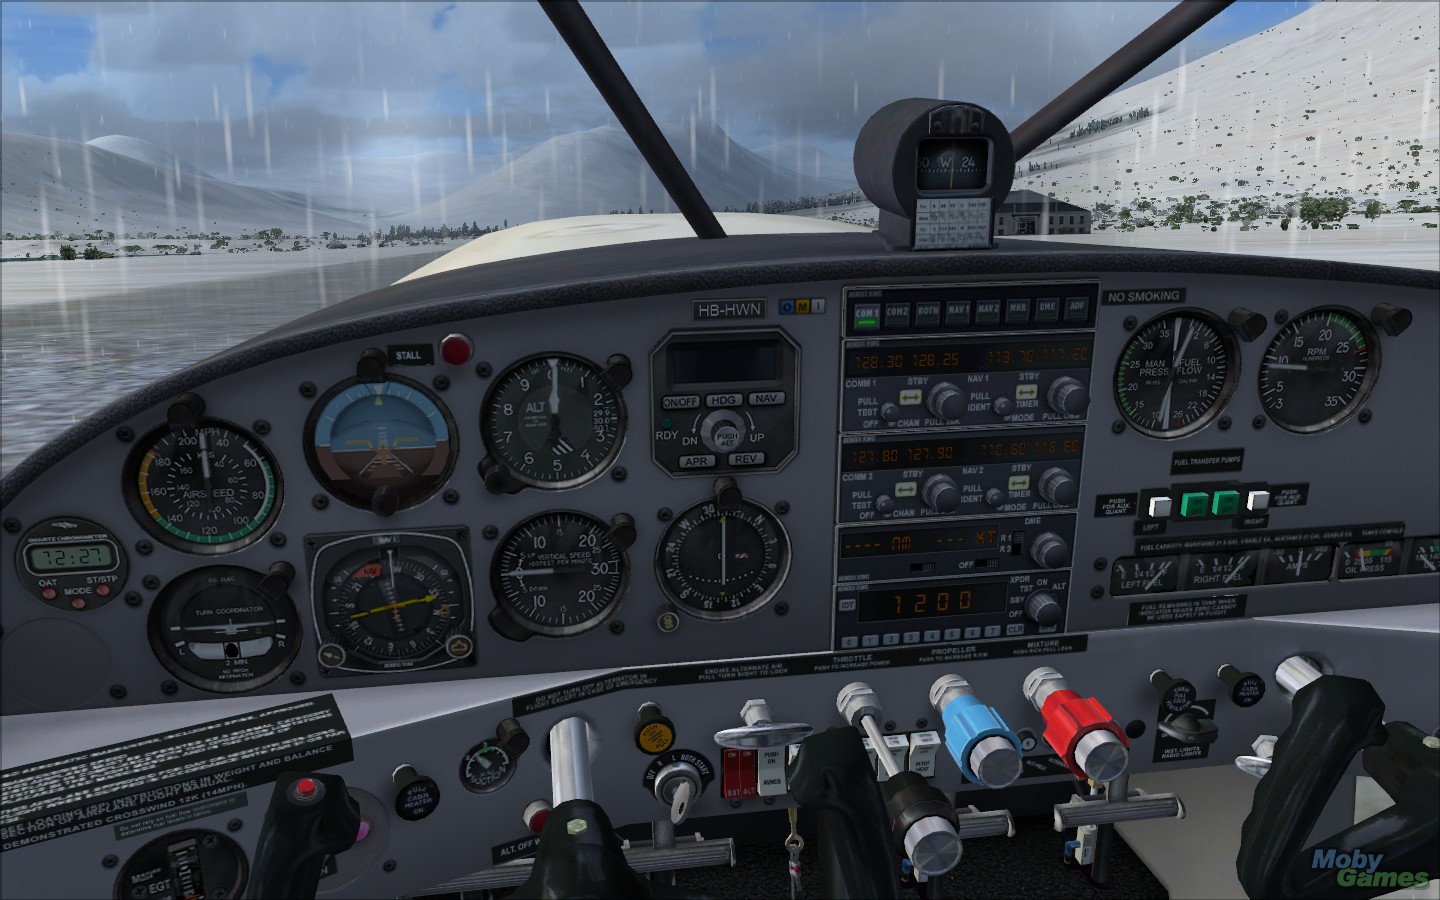 free download microsoft flight simulator x gold edition